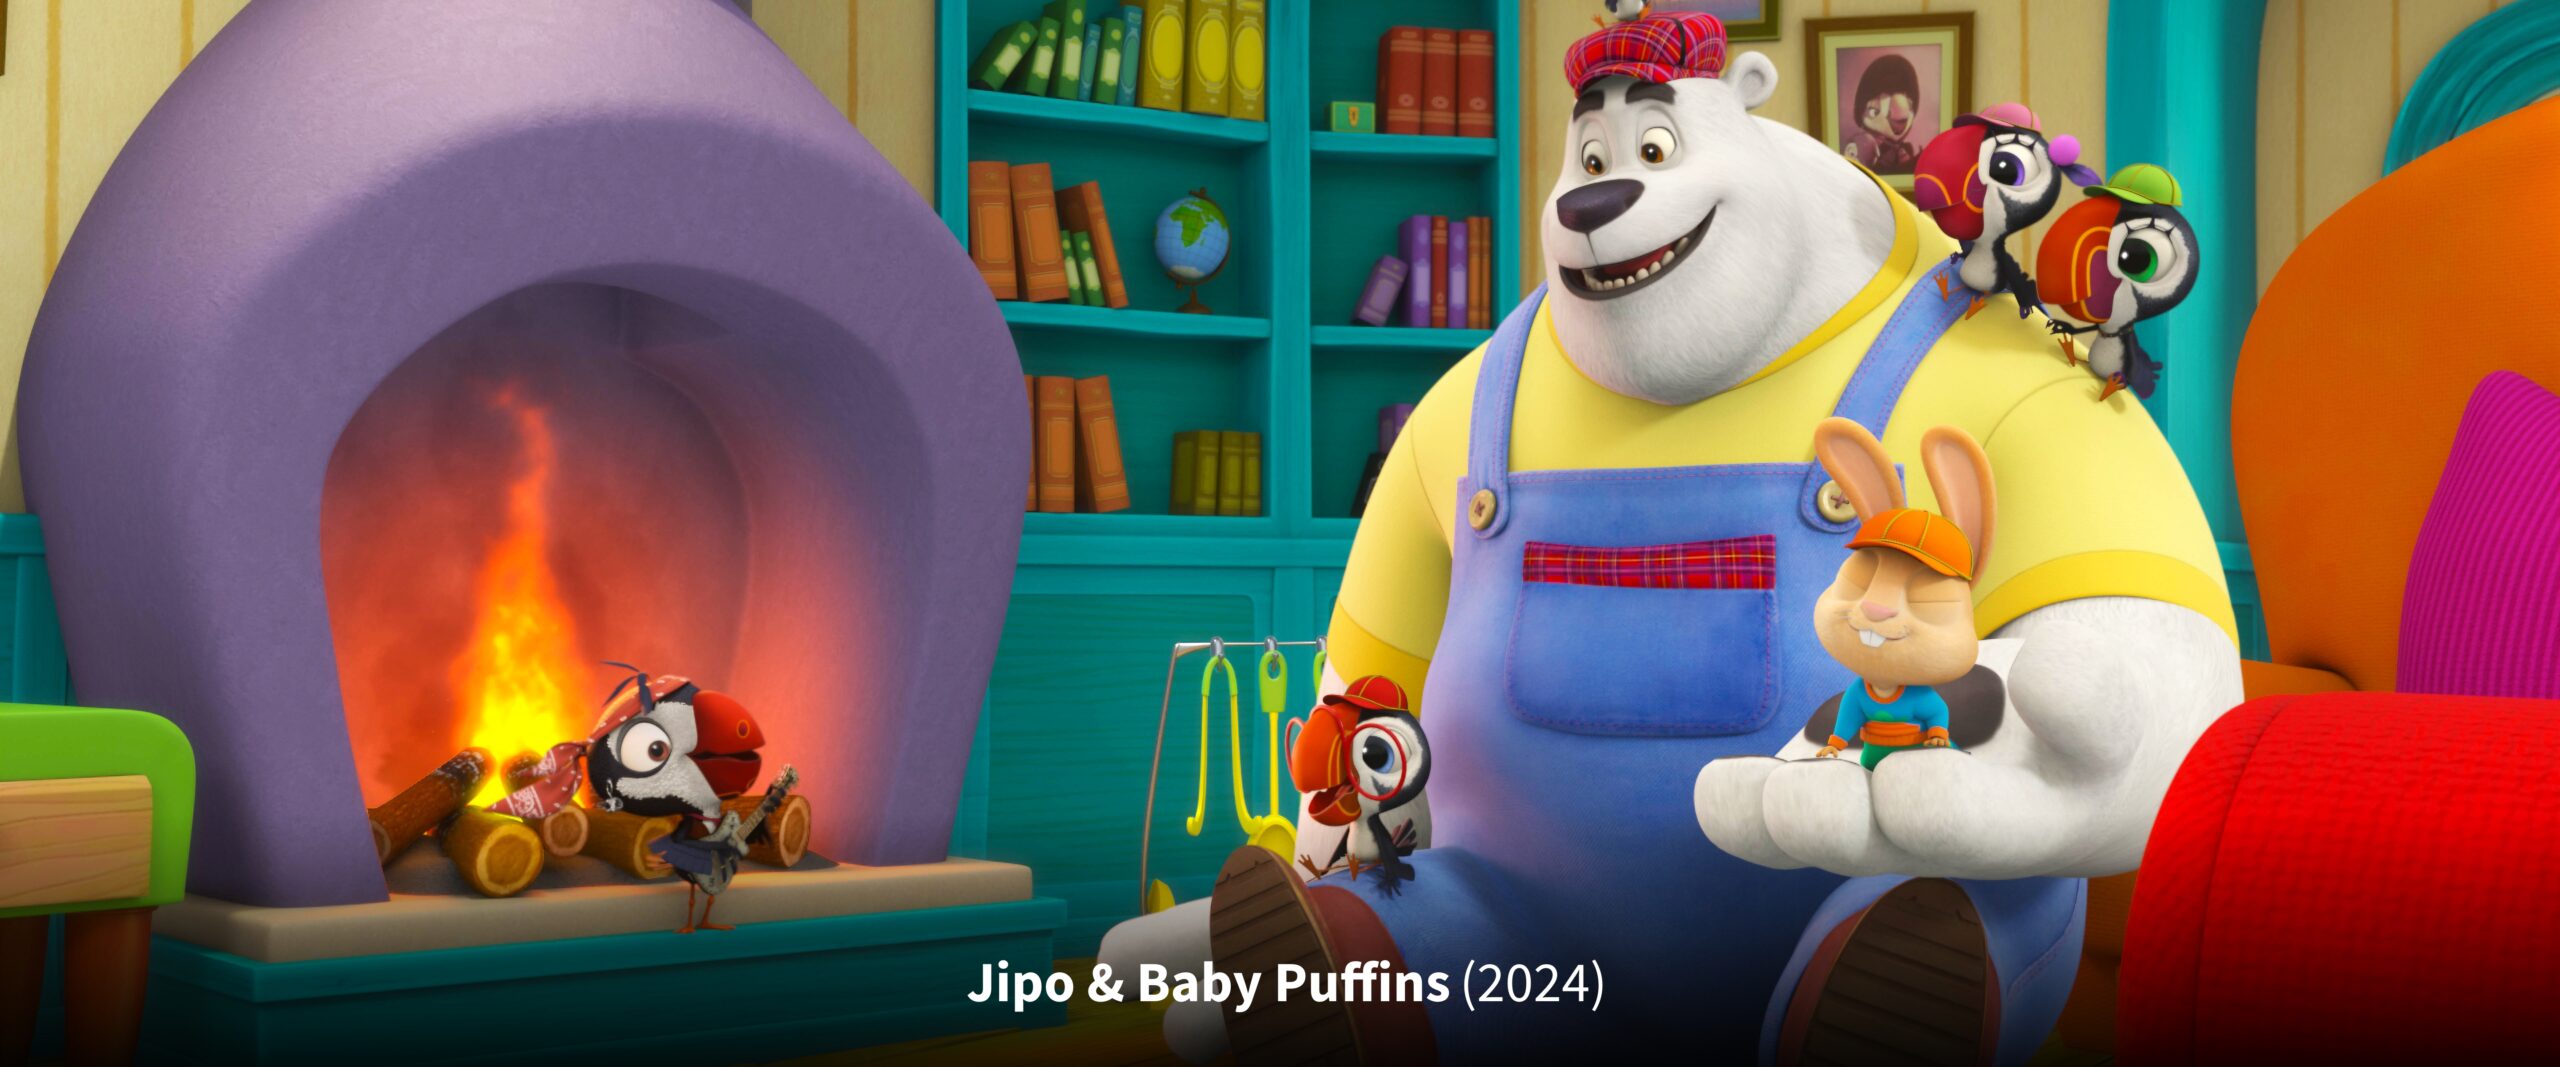 Jipo & Baby Puffins_banner website 1440x600-@2x wText